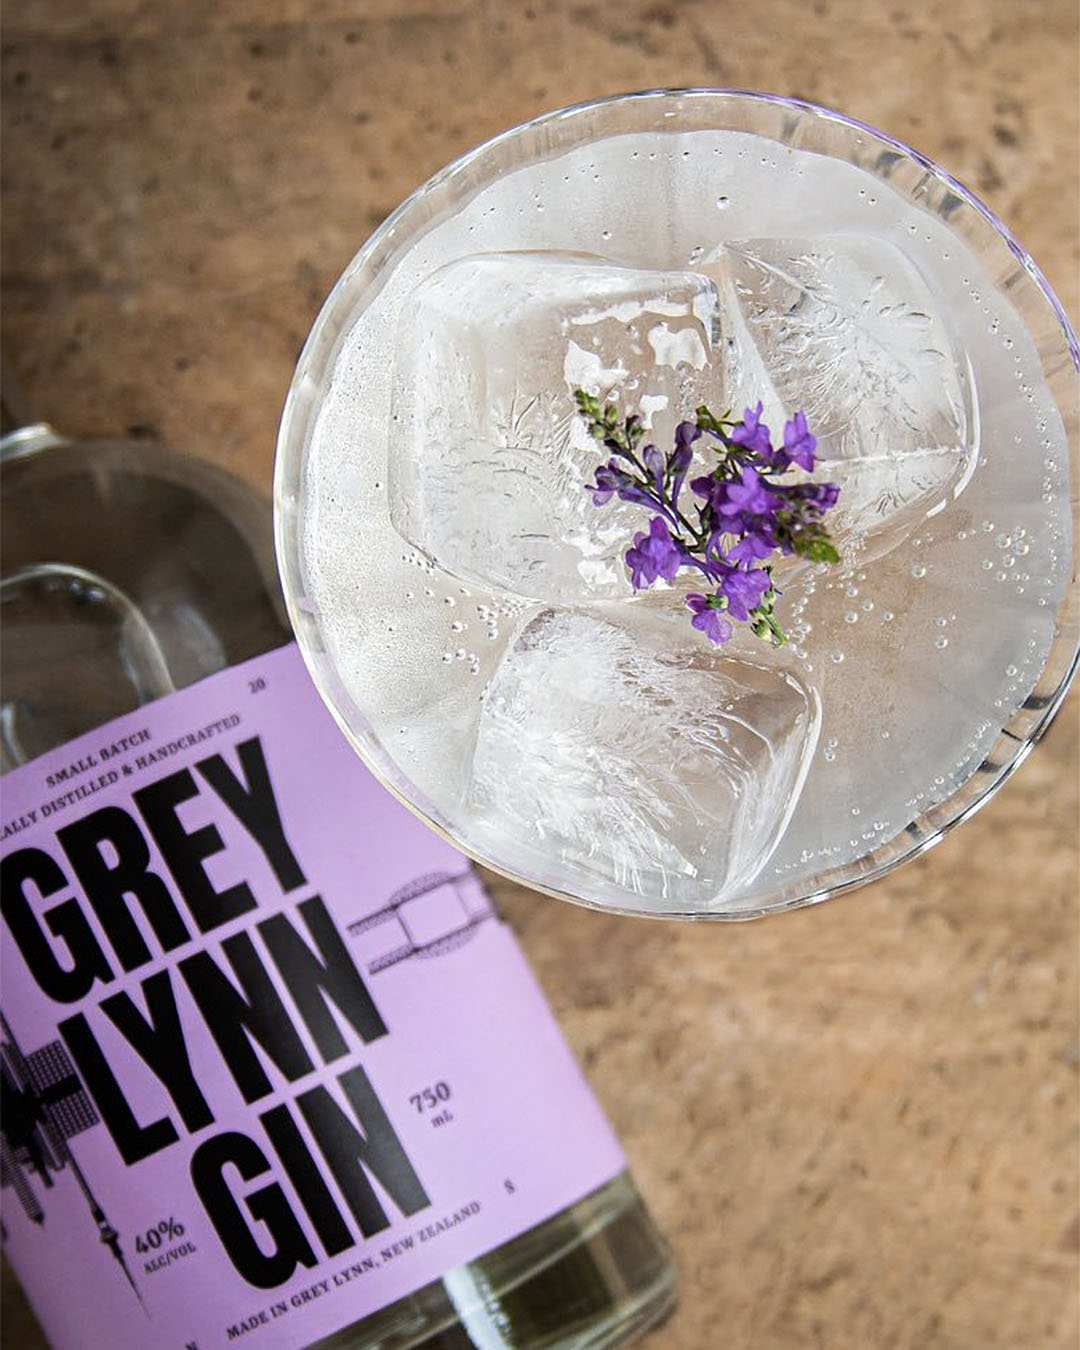 Grey Lynn Gin from Cove 27